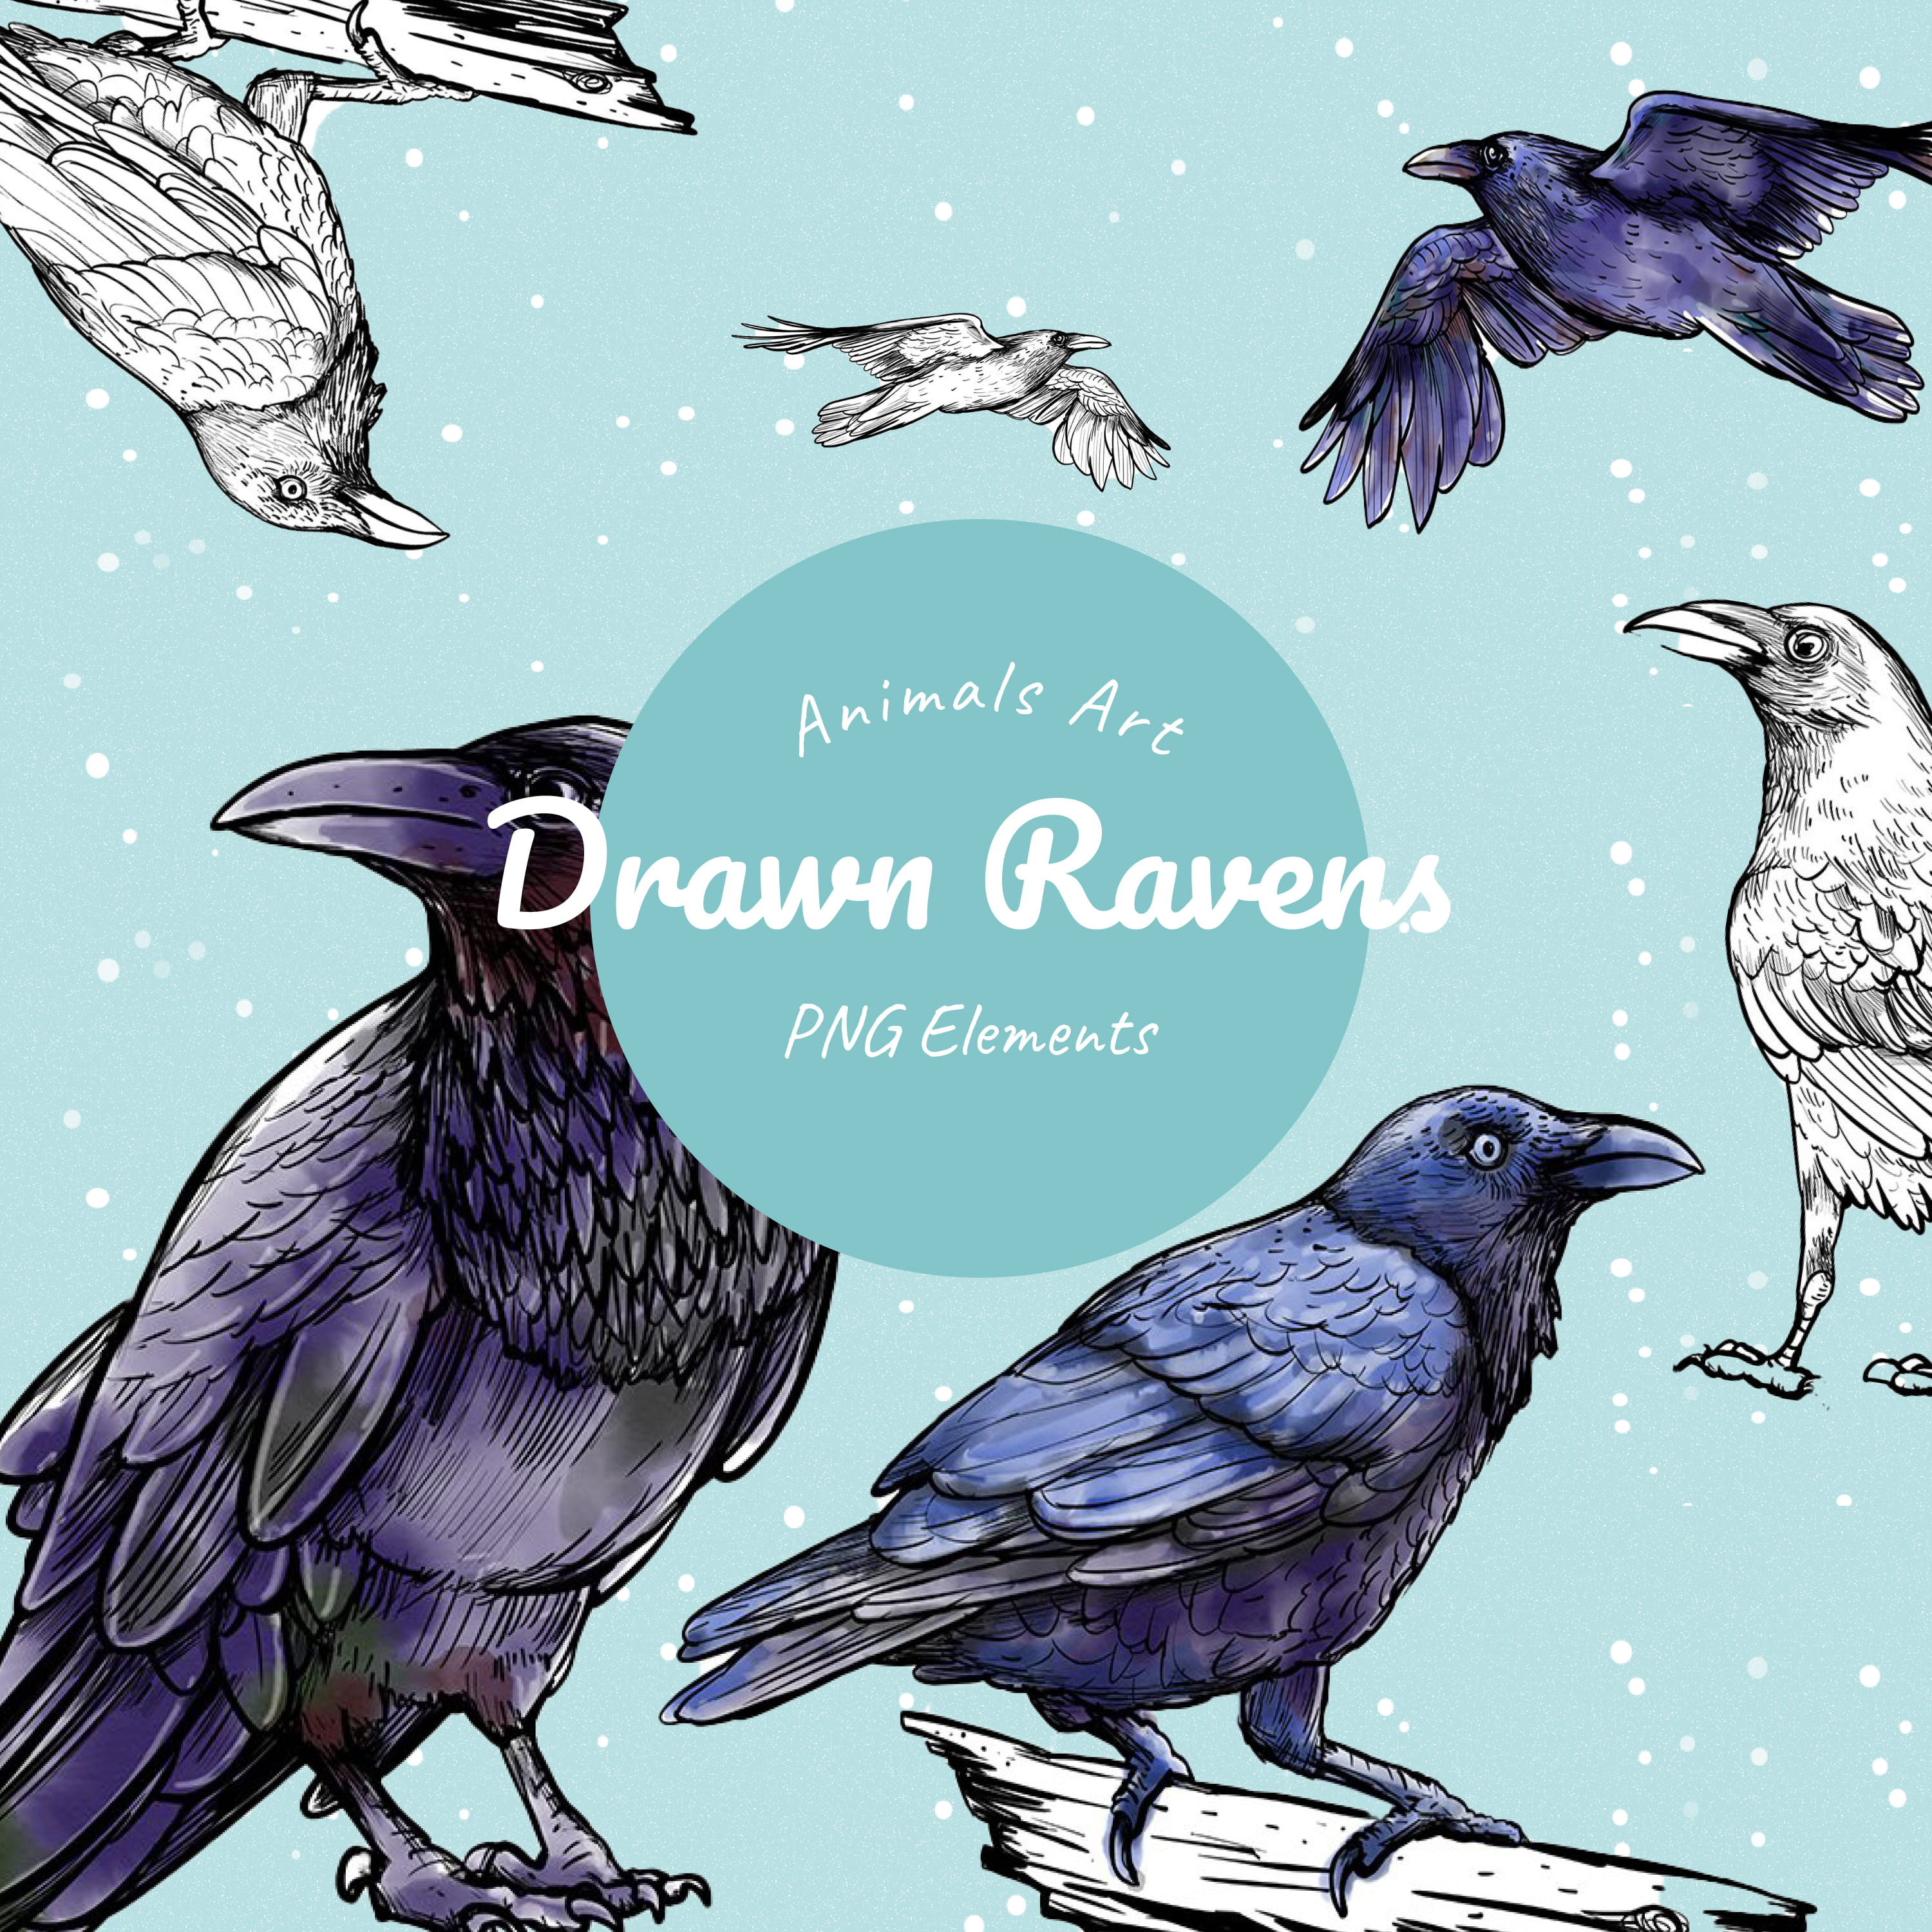 Drawn ravens - main image preview.